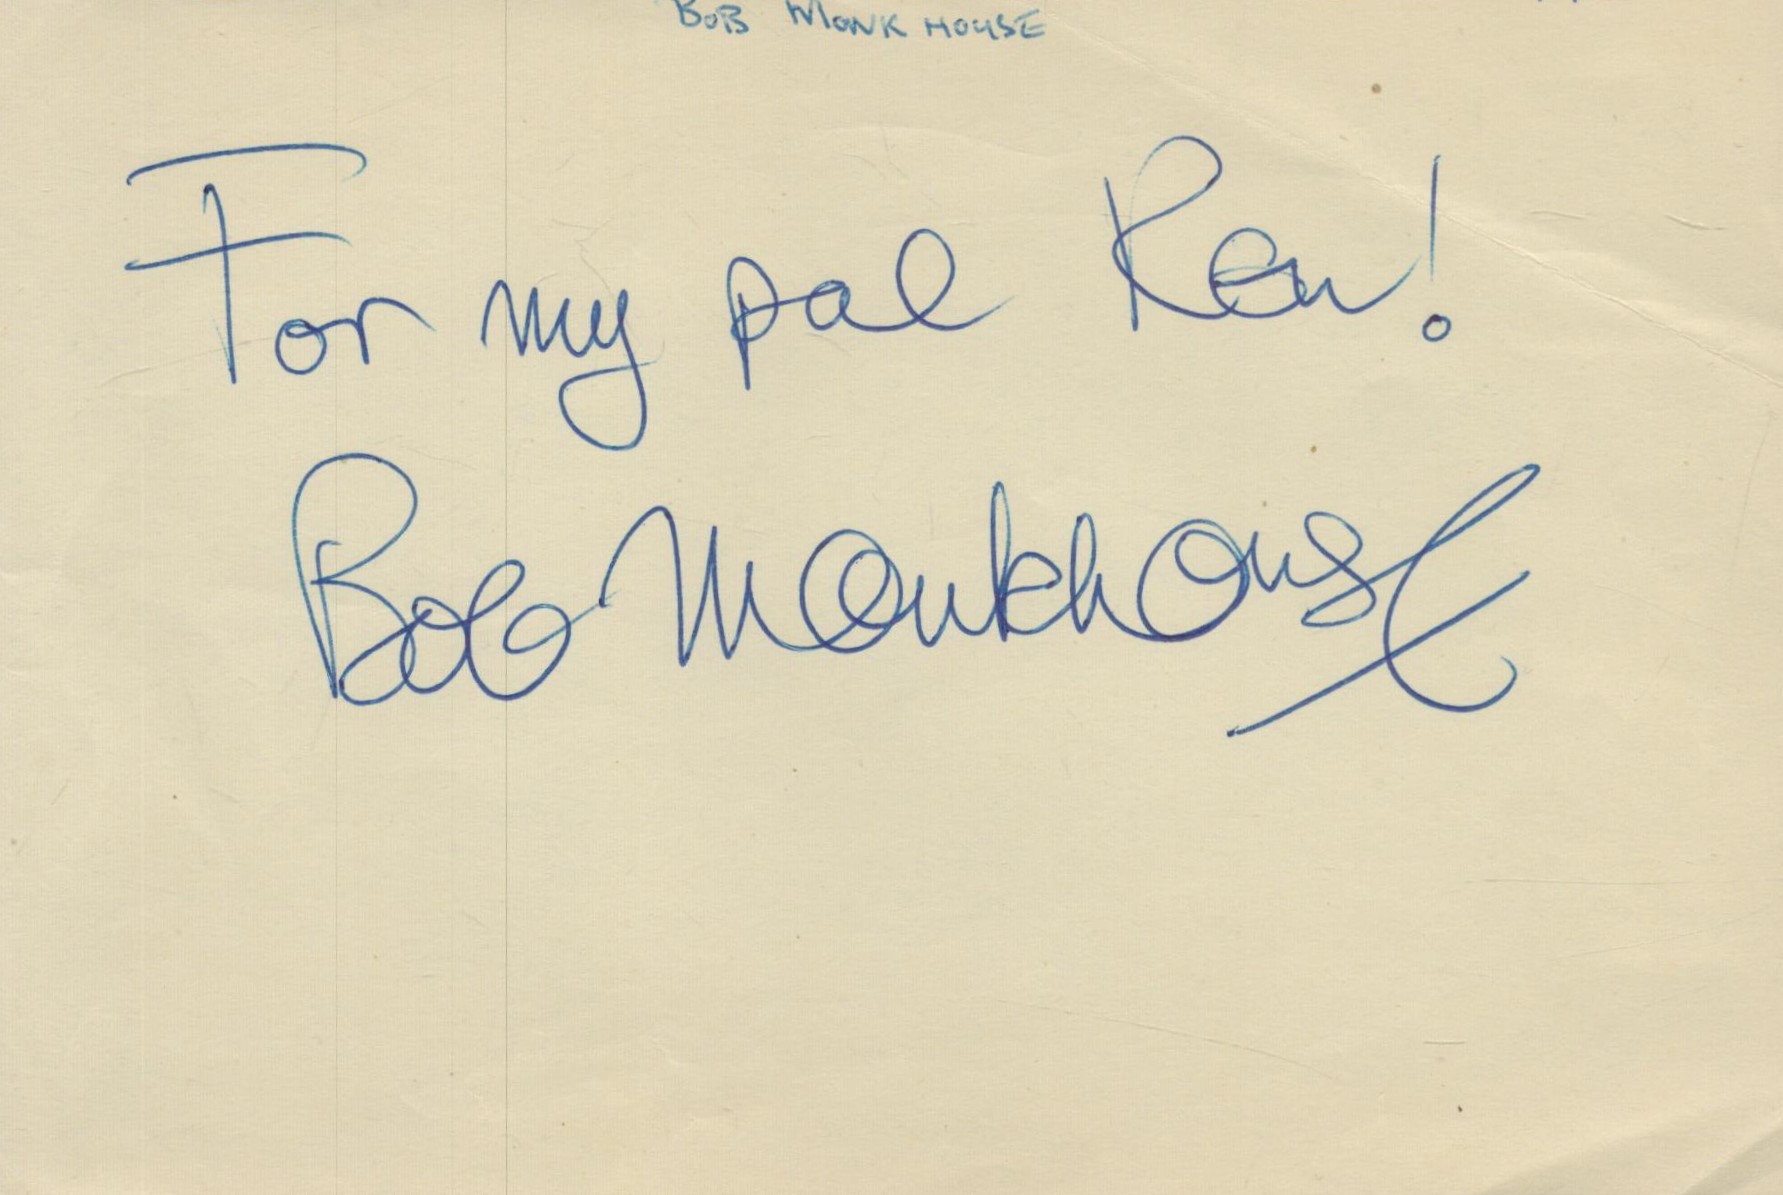 BOB MONKHOUSE British Entertainer 1928-2003 signed vintage 1965 Album Page. Good Condition. All